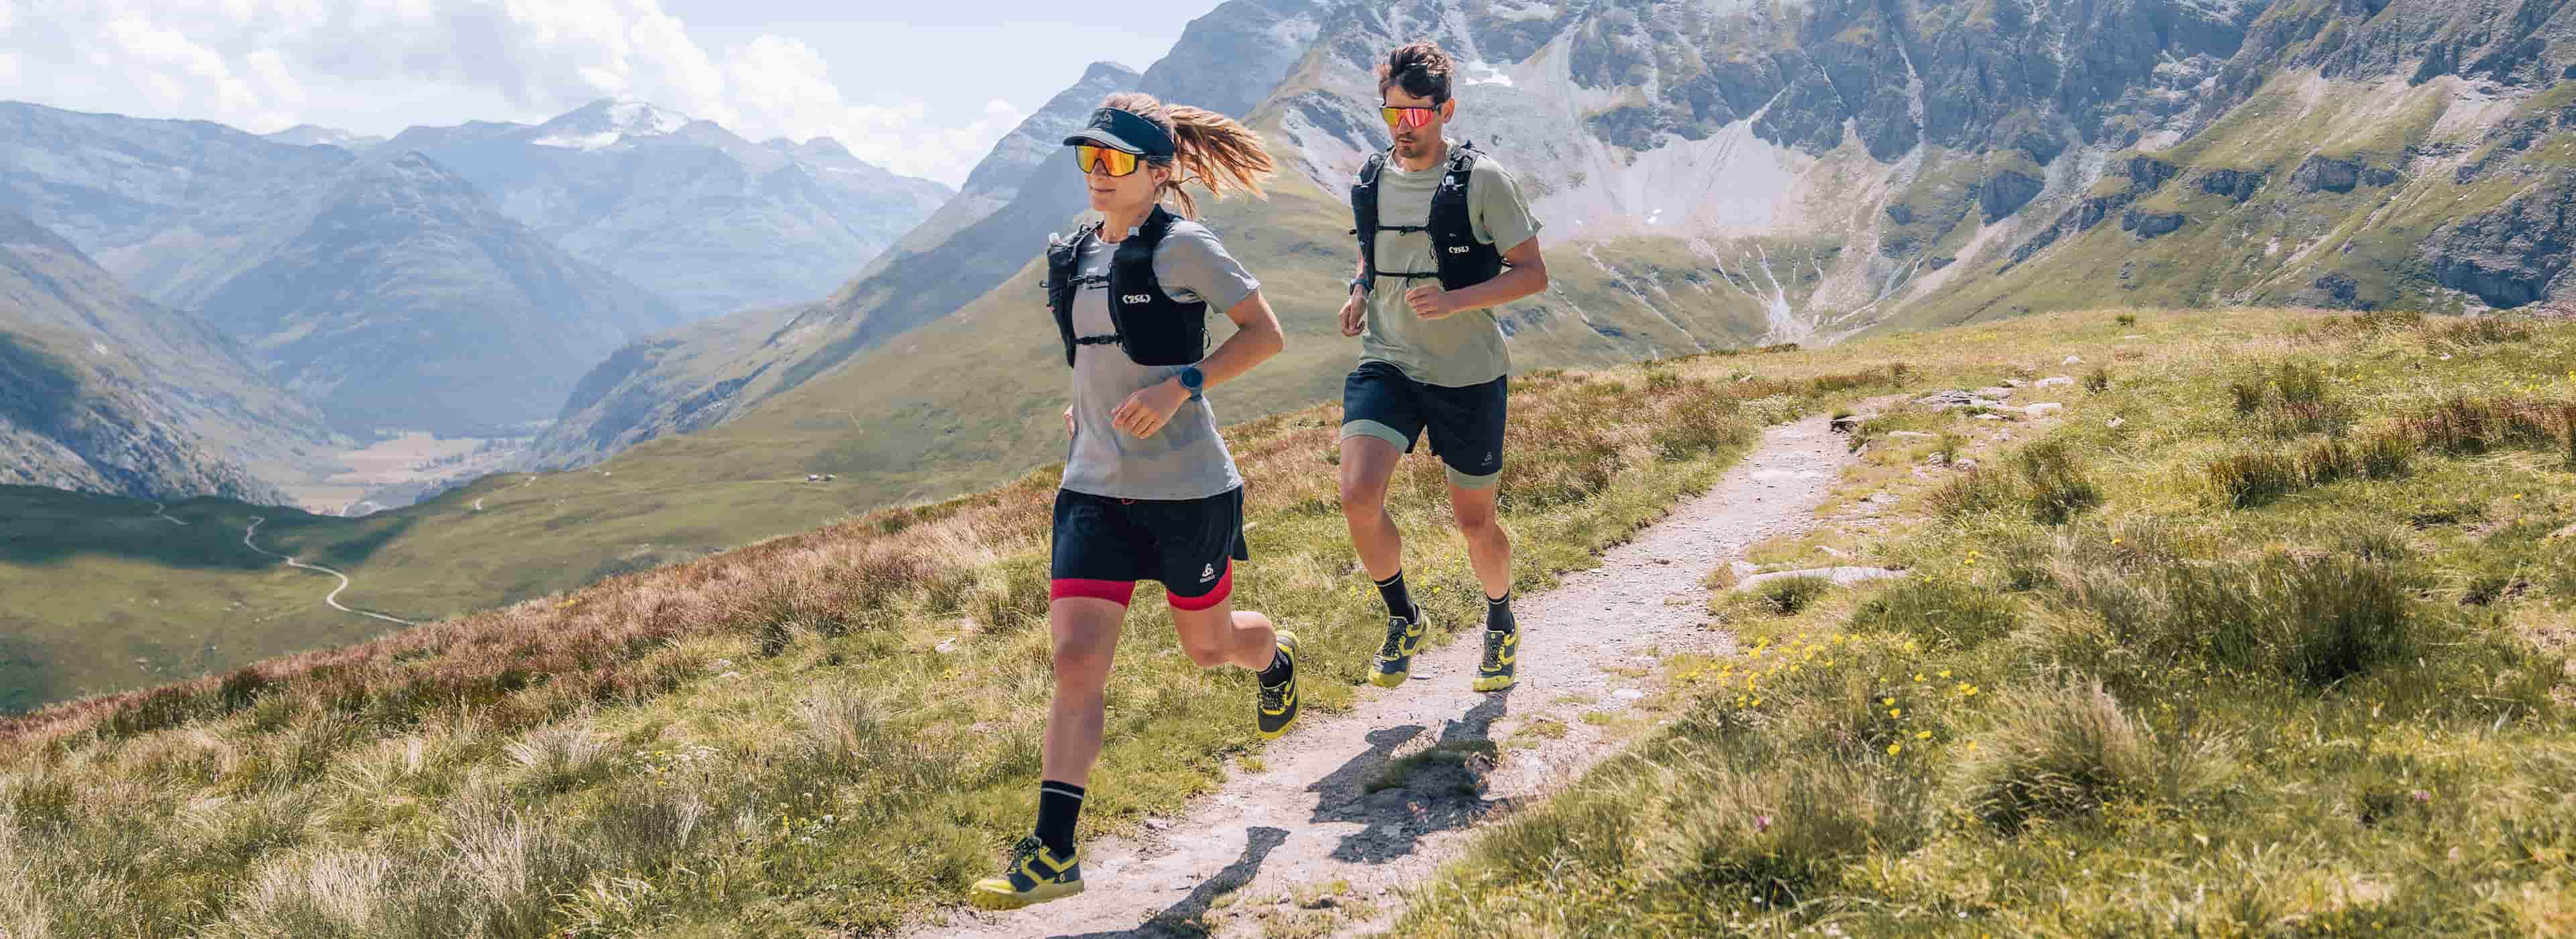 women and men running in x-alp trail running spring summer collection